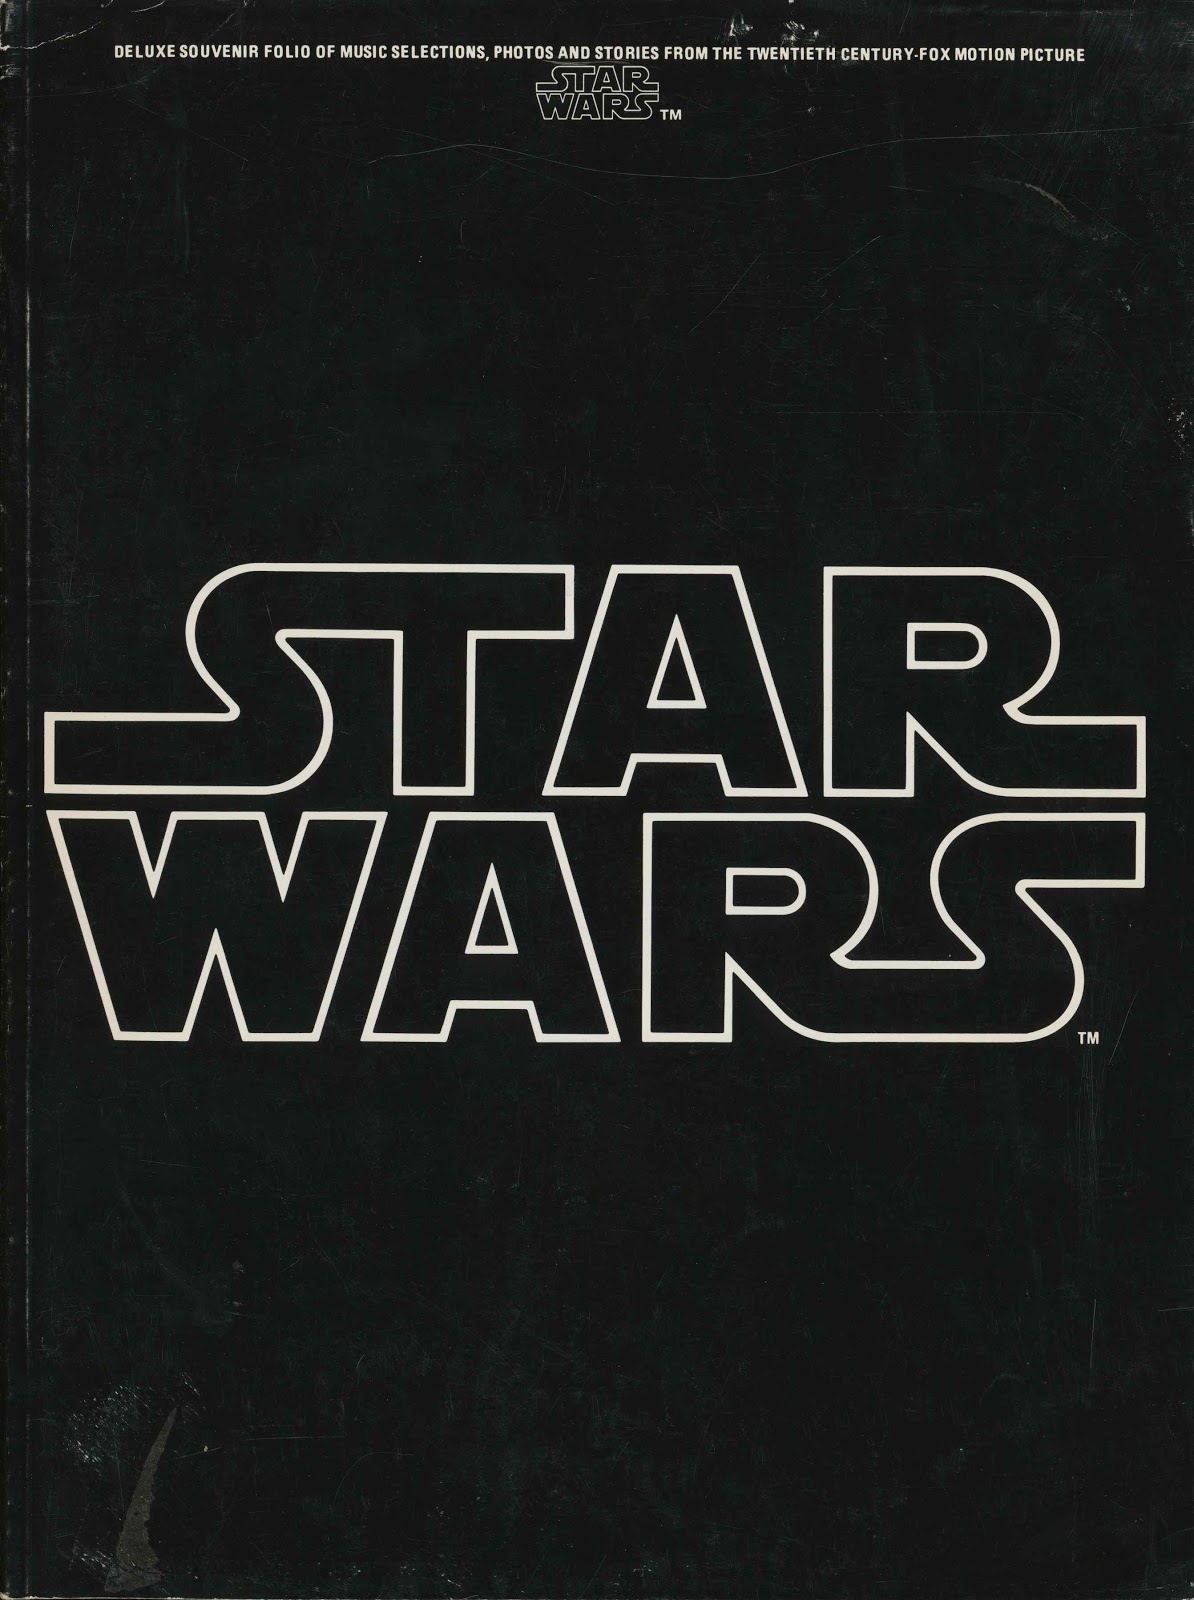 Anatomy Of A Logo: Star Wars